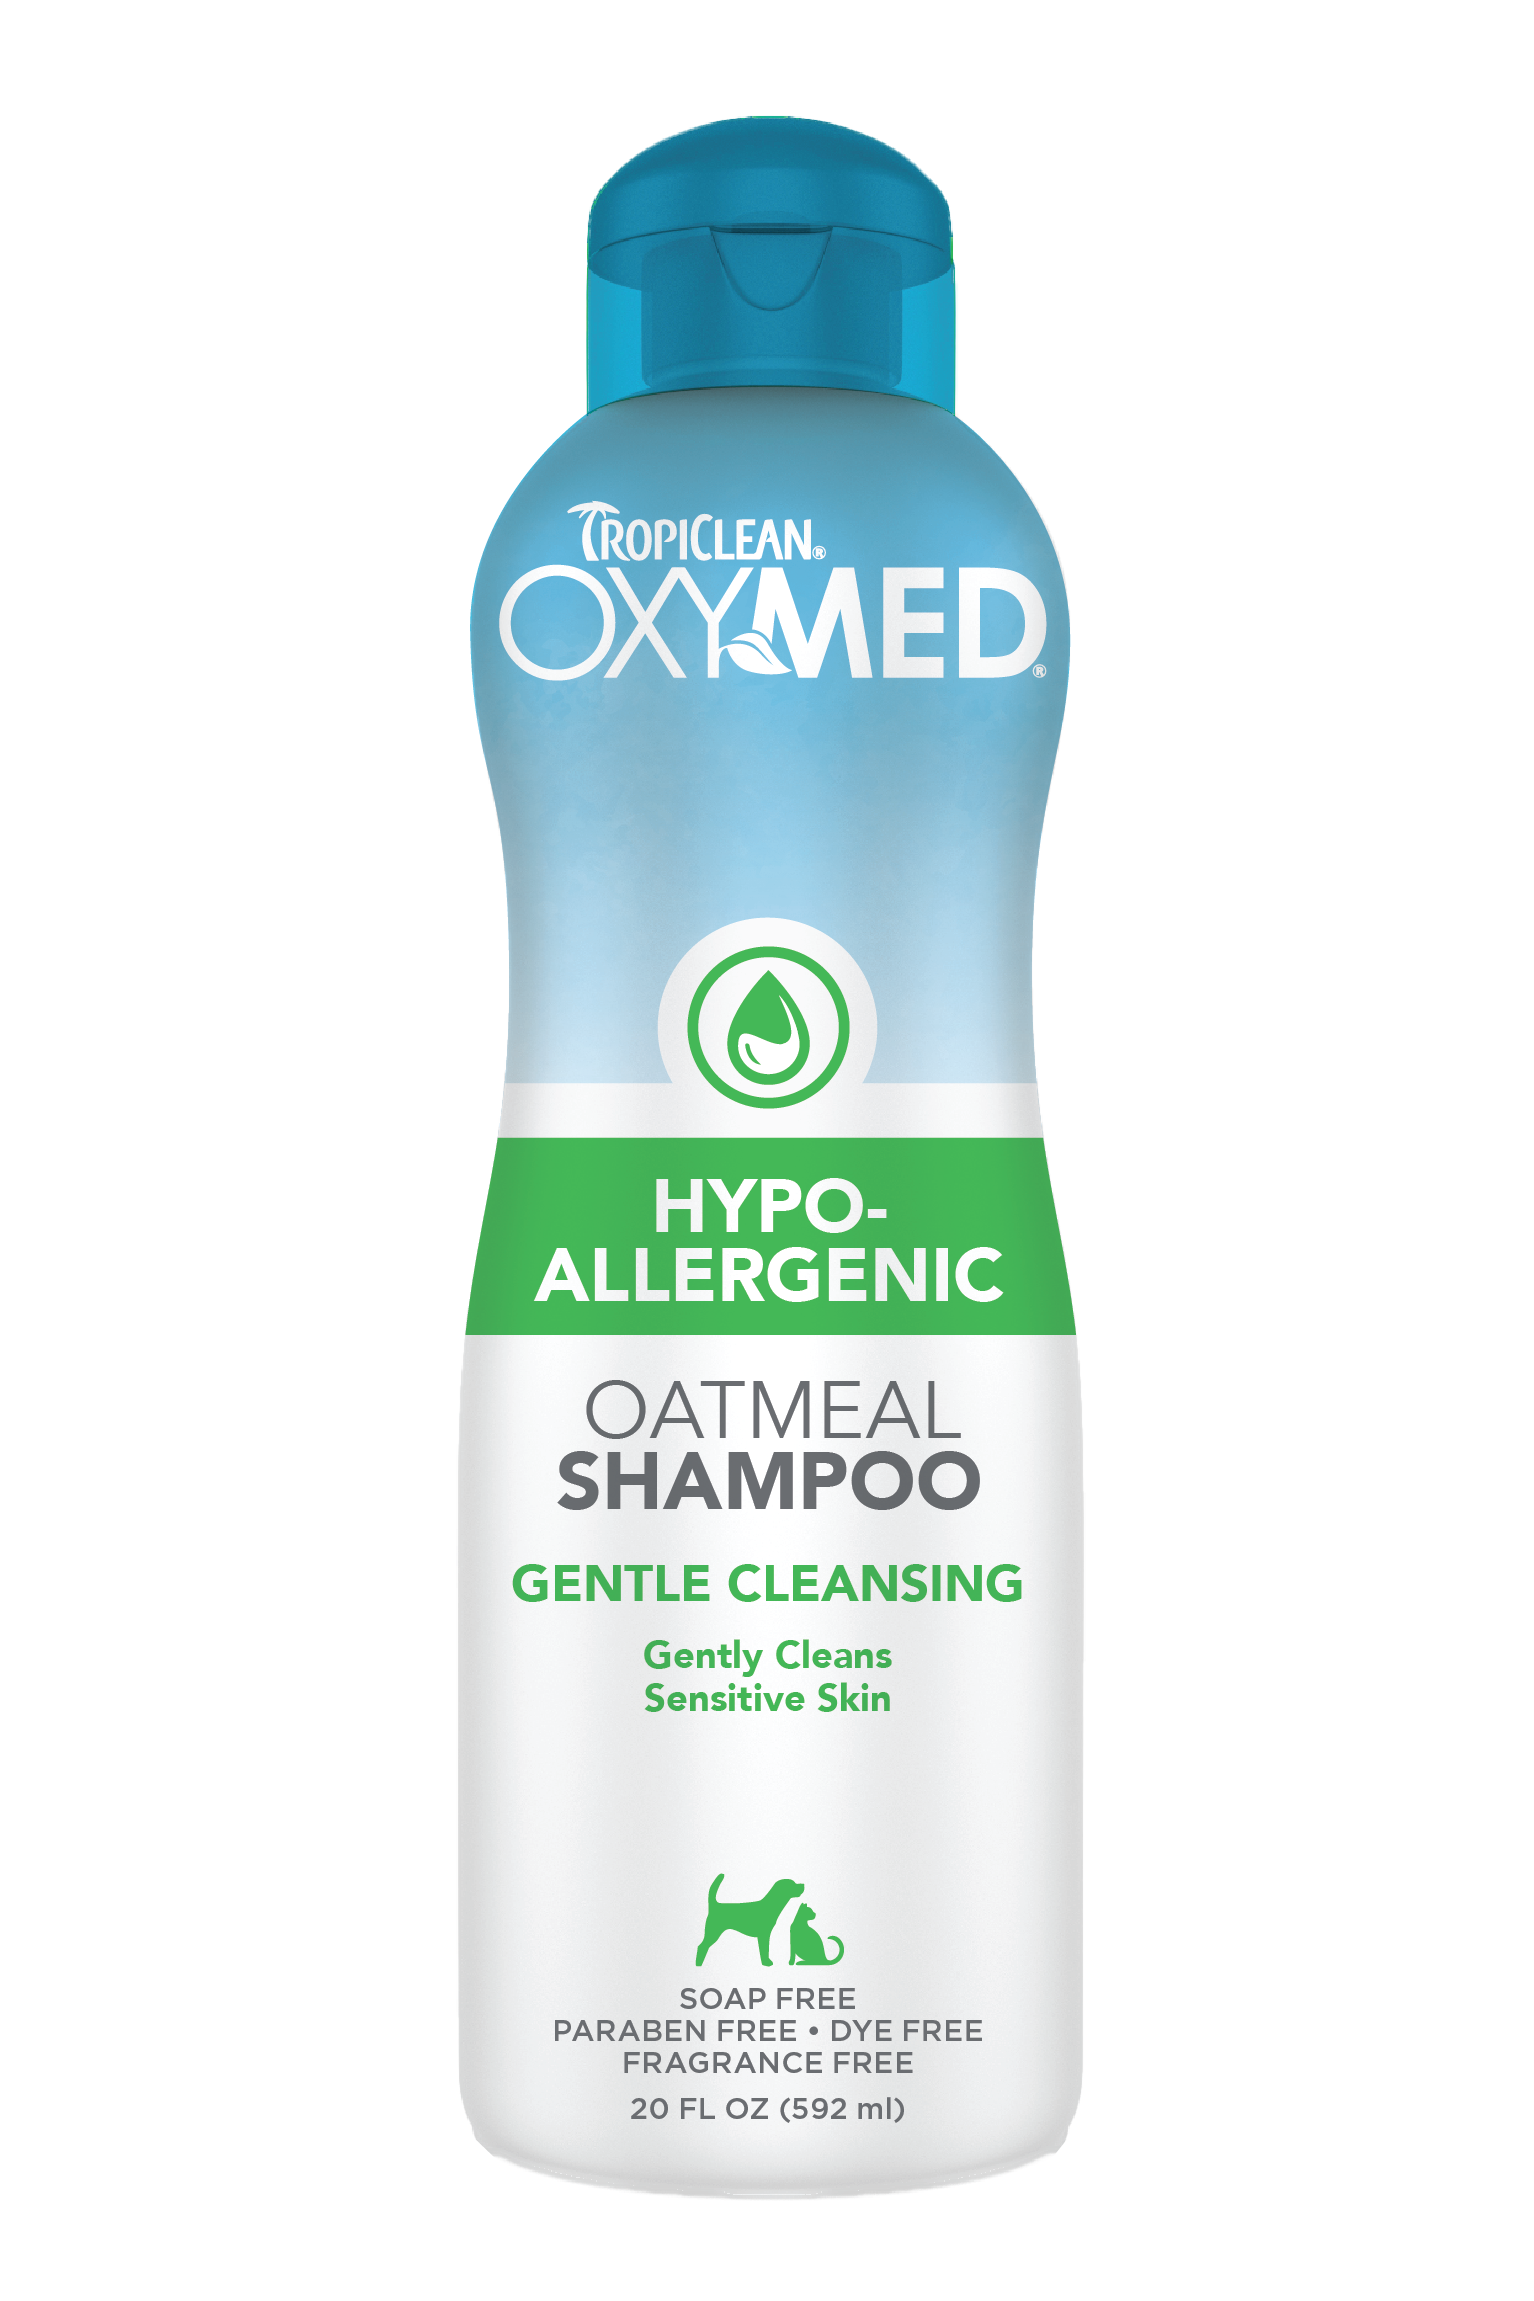 Tropiclean Oxymed Hypo-allergenic Shampoo